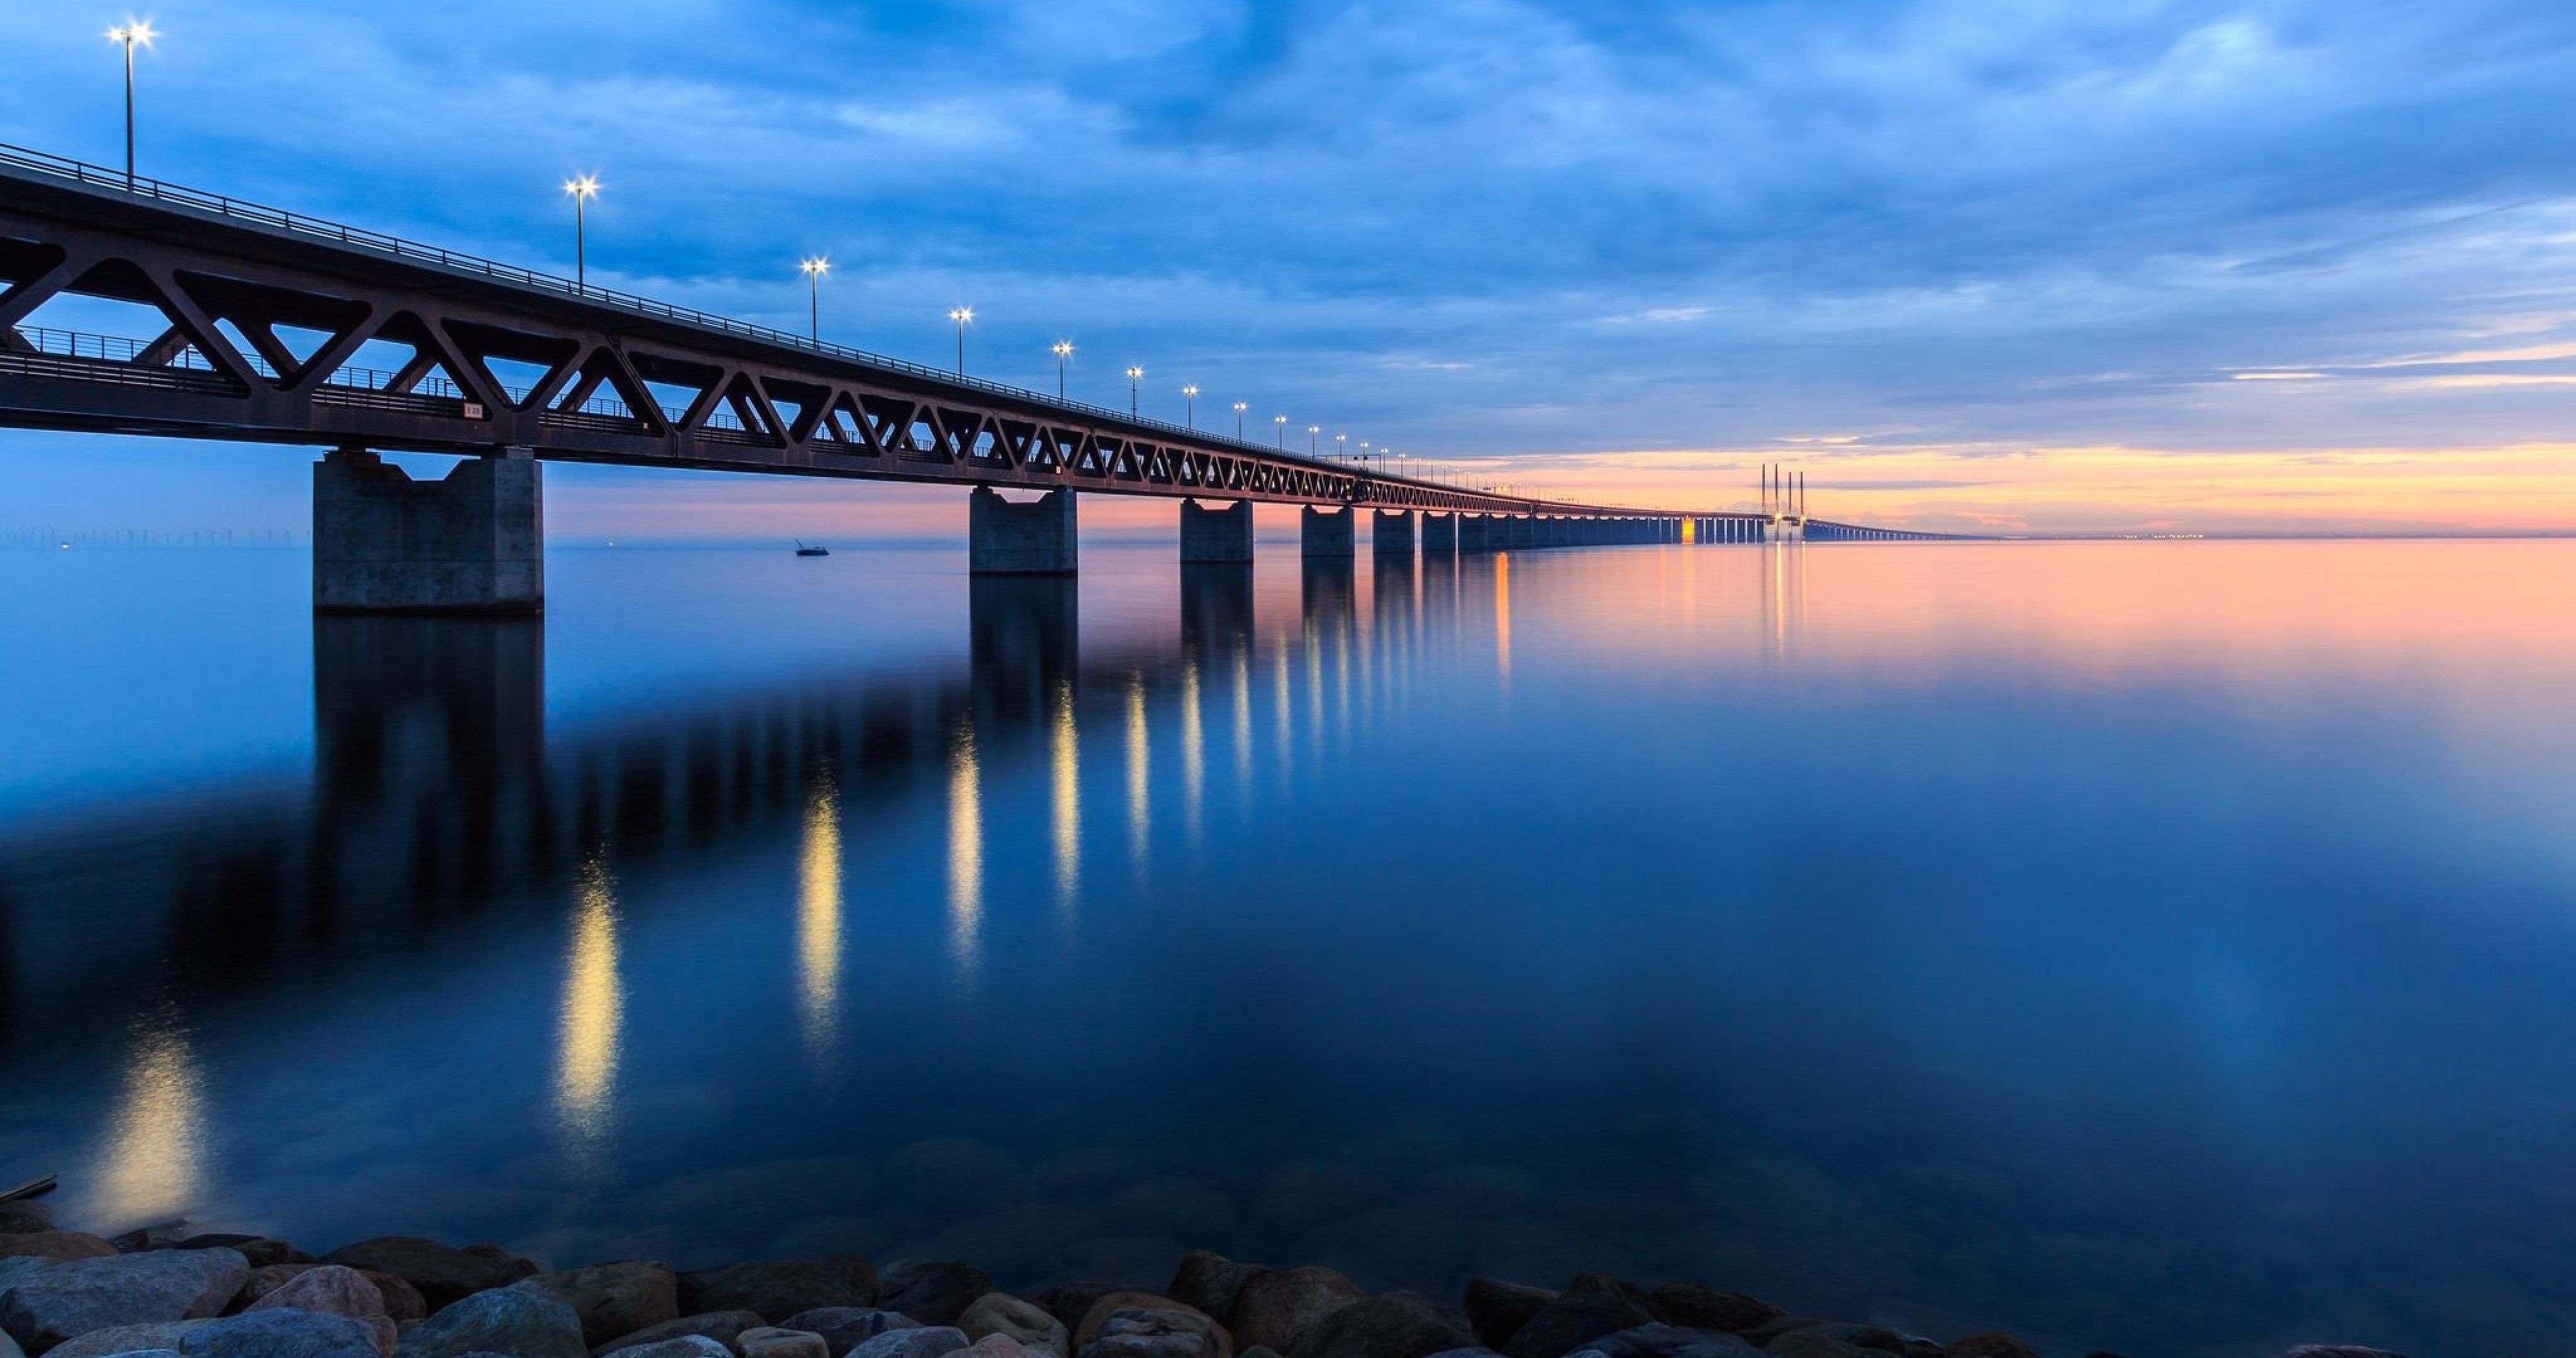 sweden bridge 4k ultra HD wallpaper. Bridge